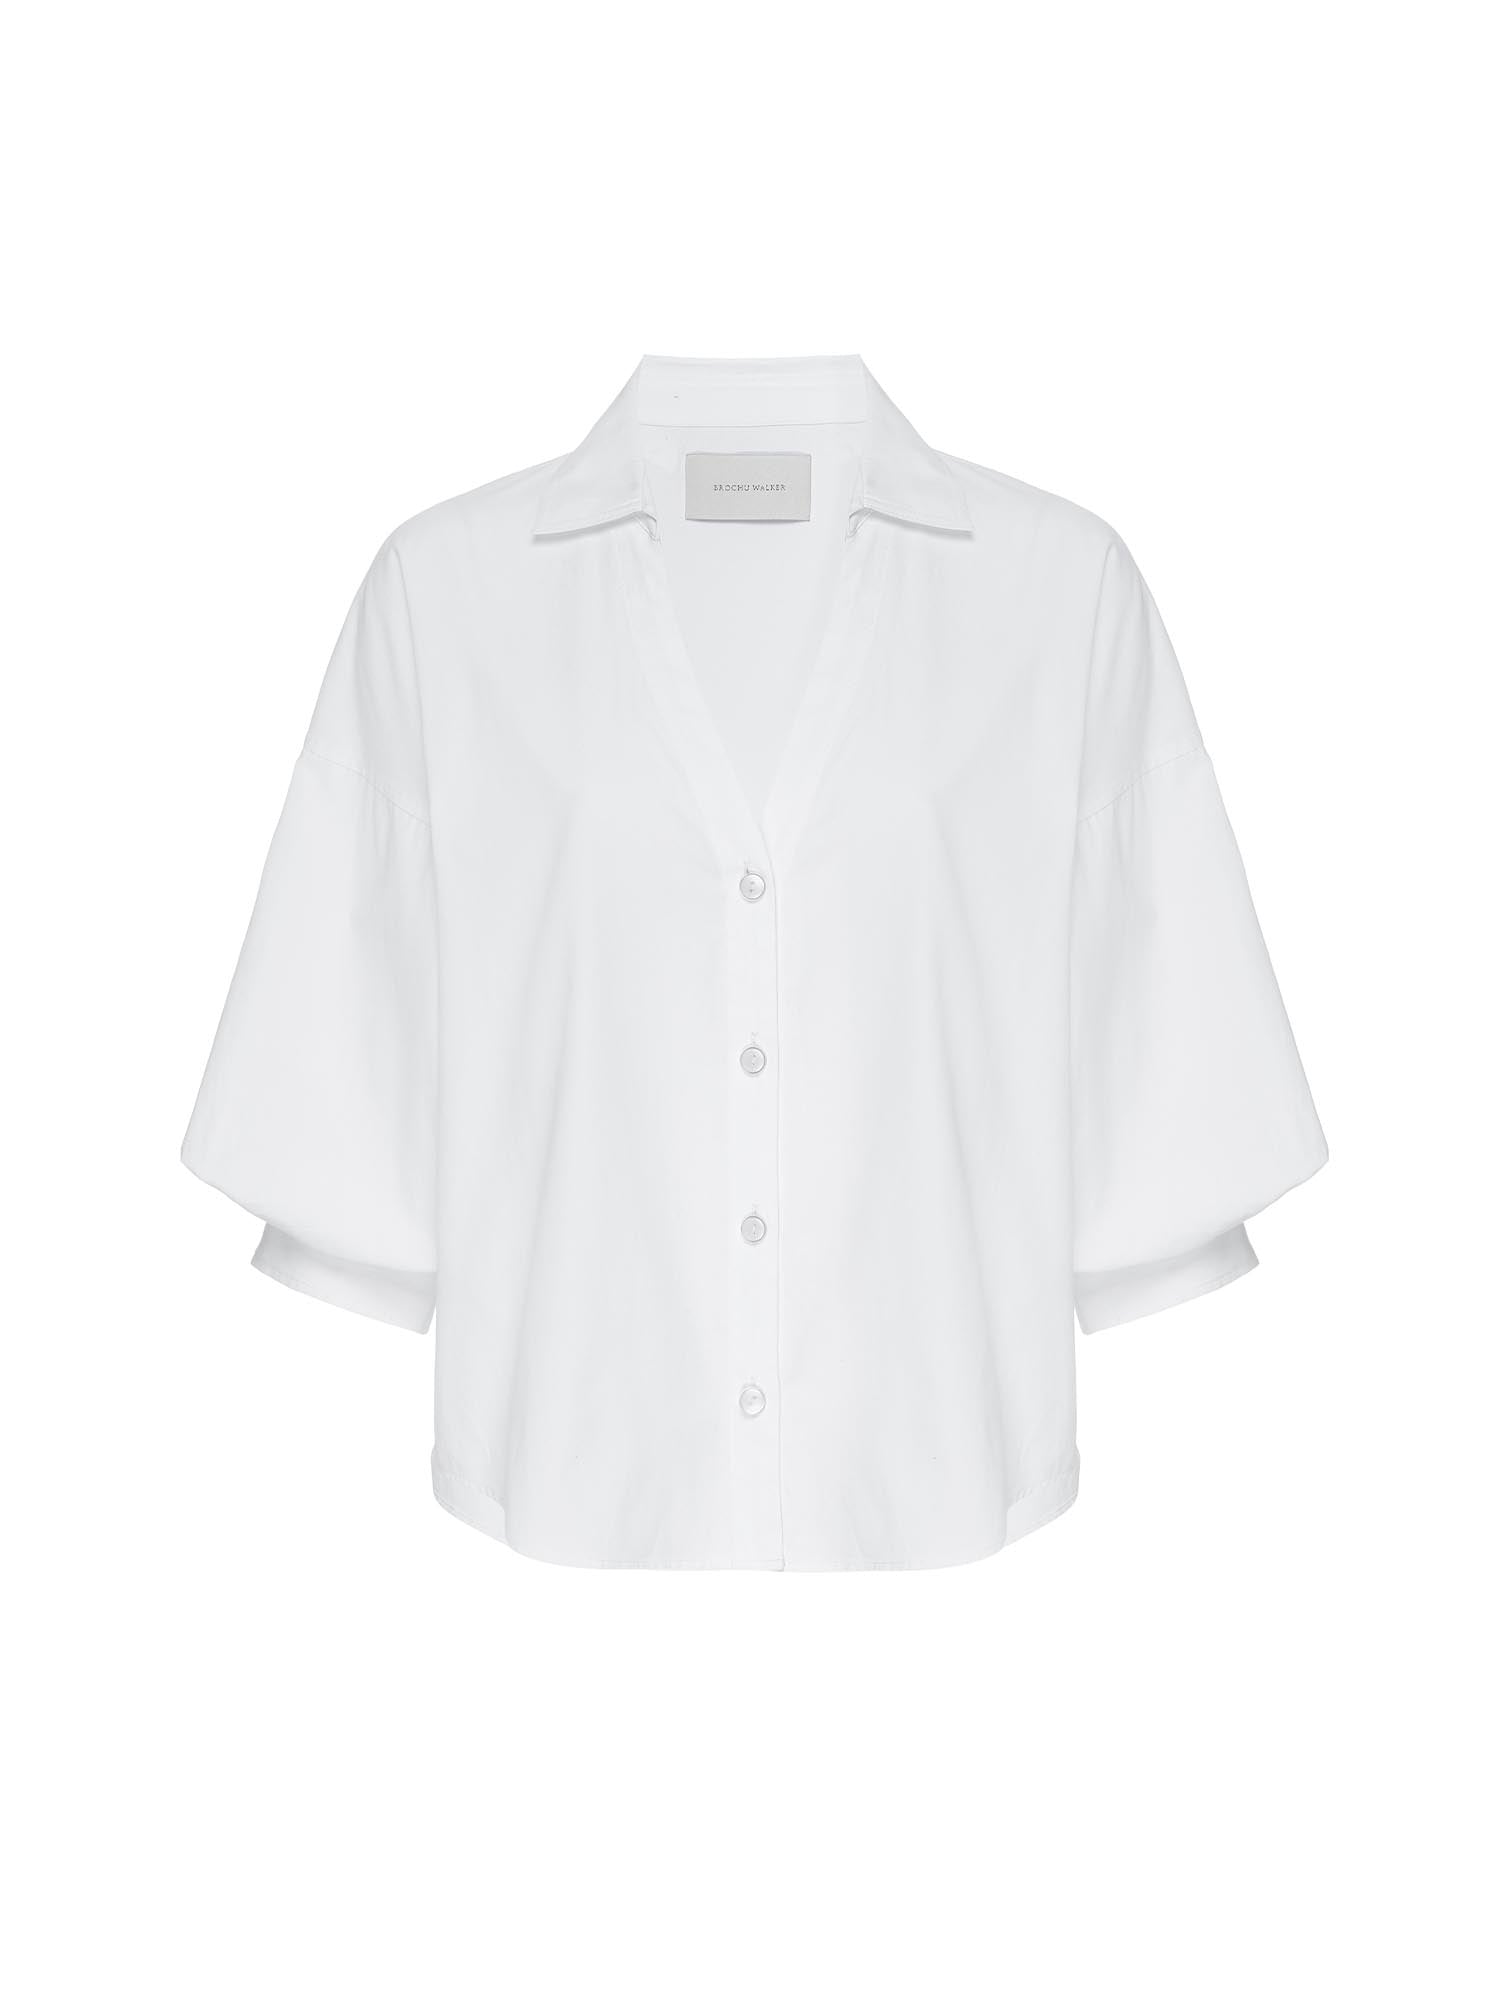 Kate V-neck button up white shirt flat view